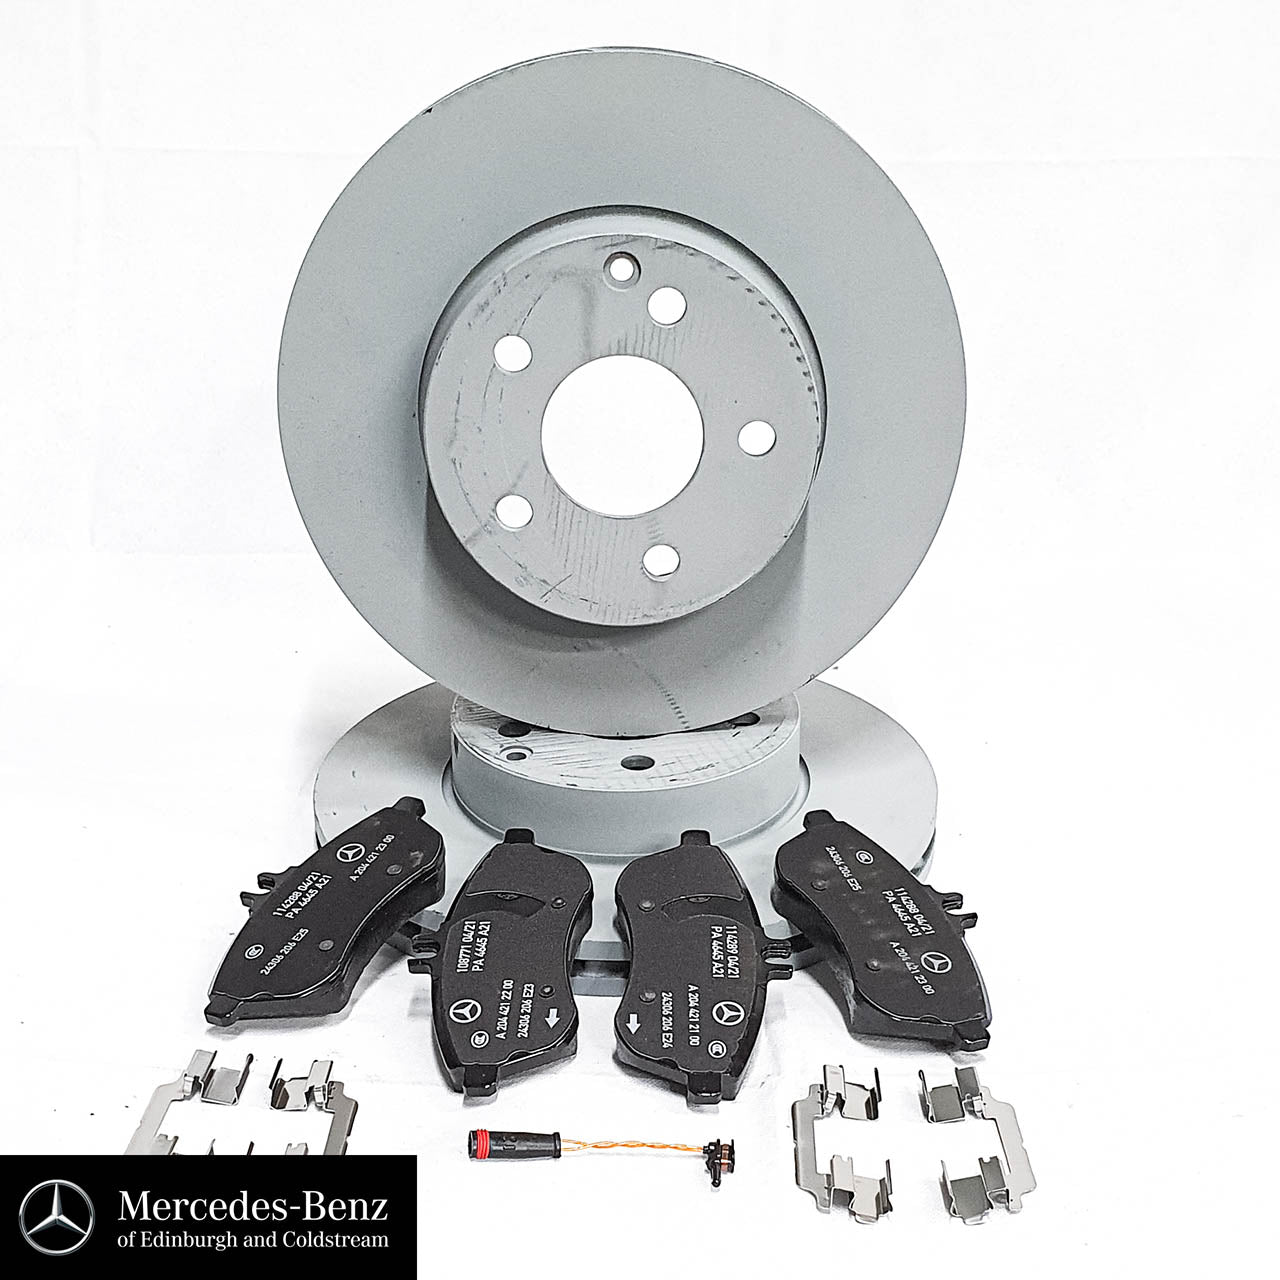 Genuine Mercedes-Benz brake pad & disc set - Front - E Class 212 models